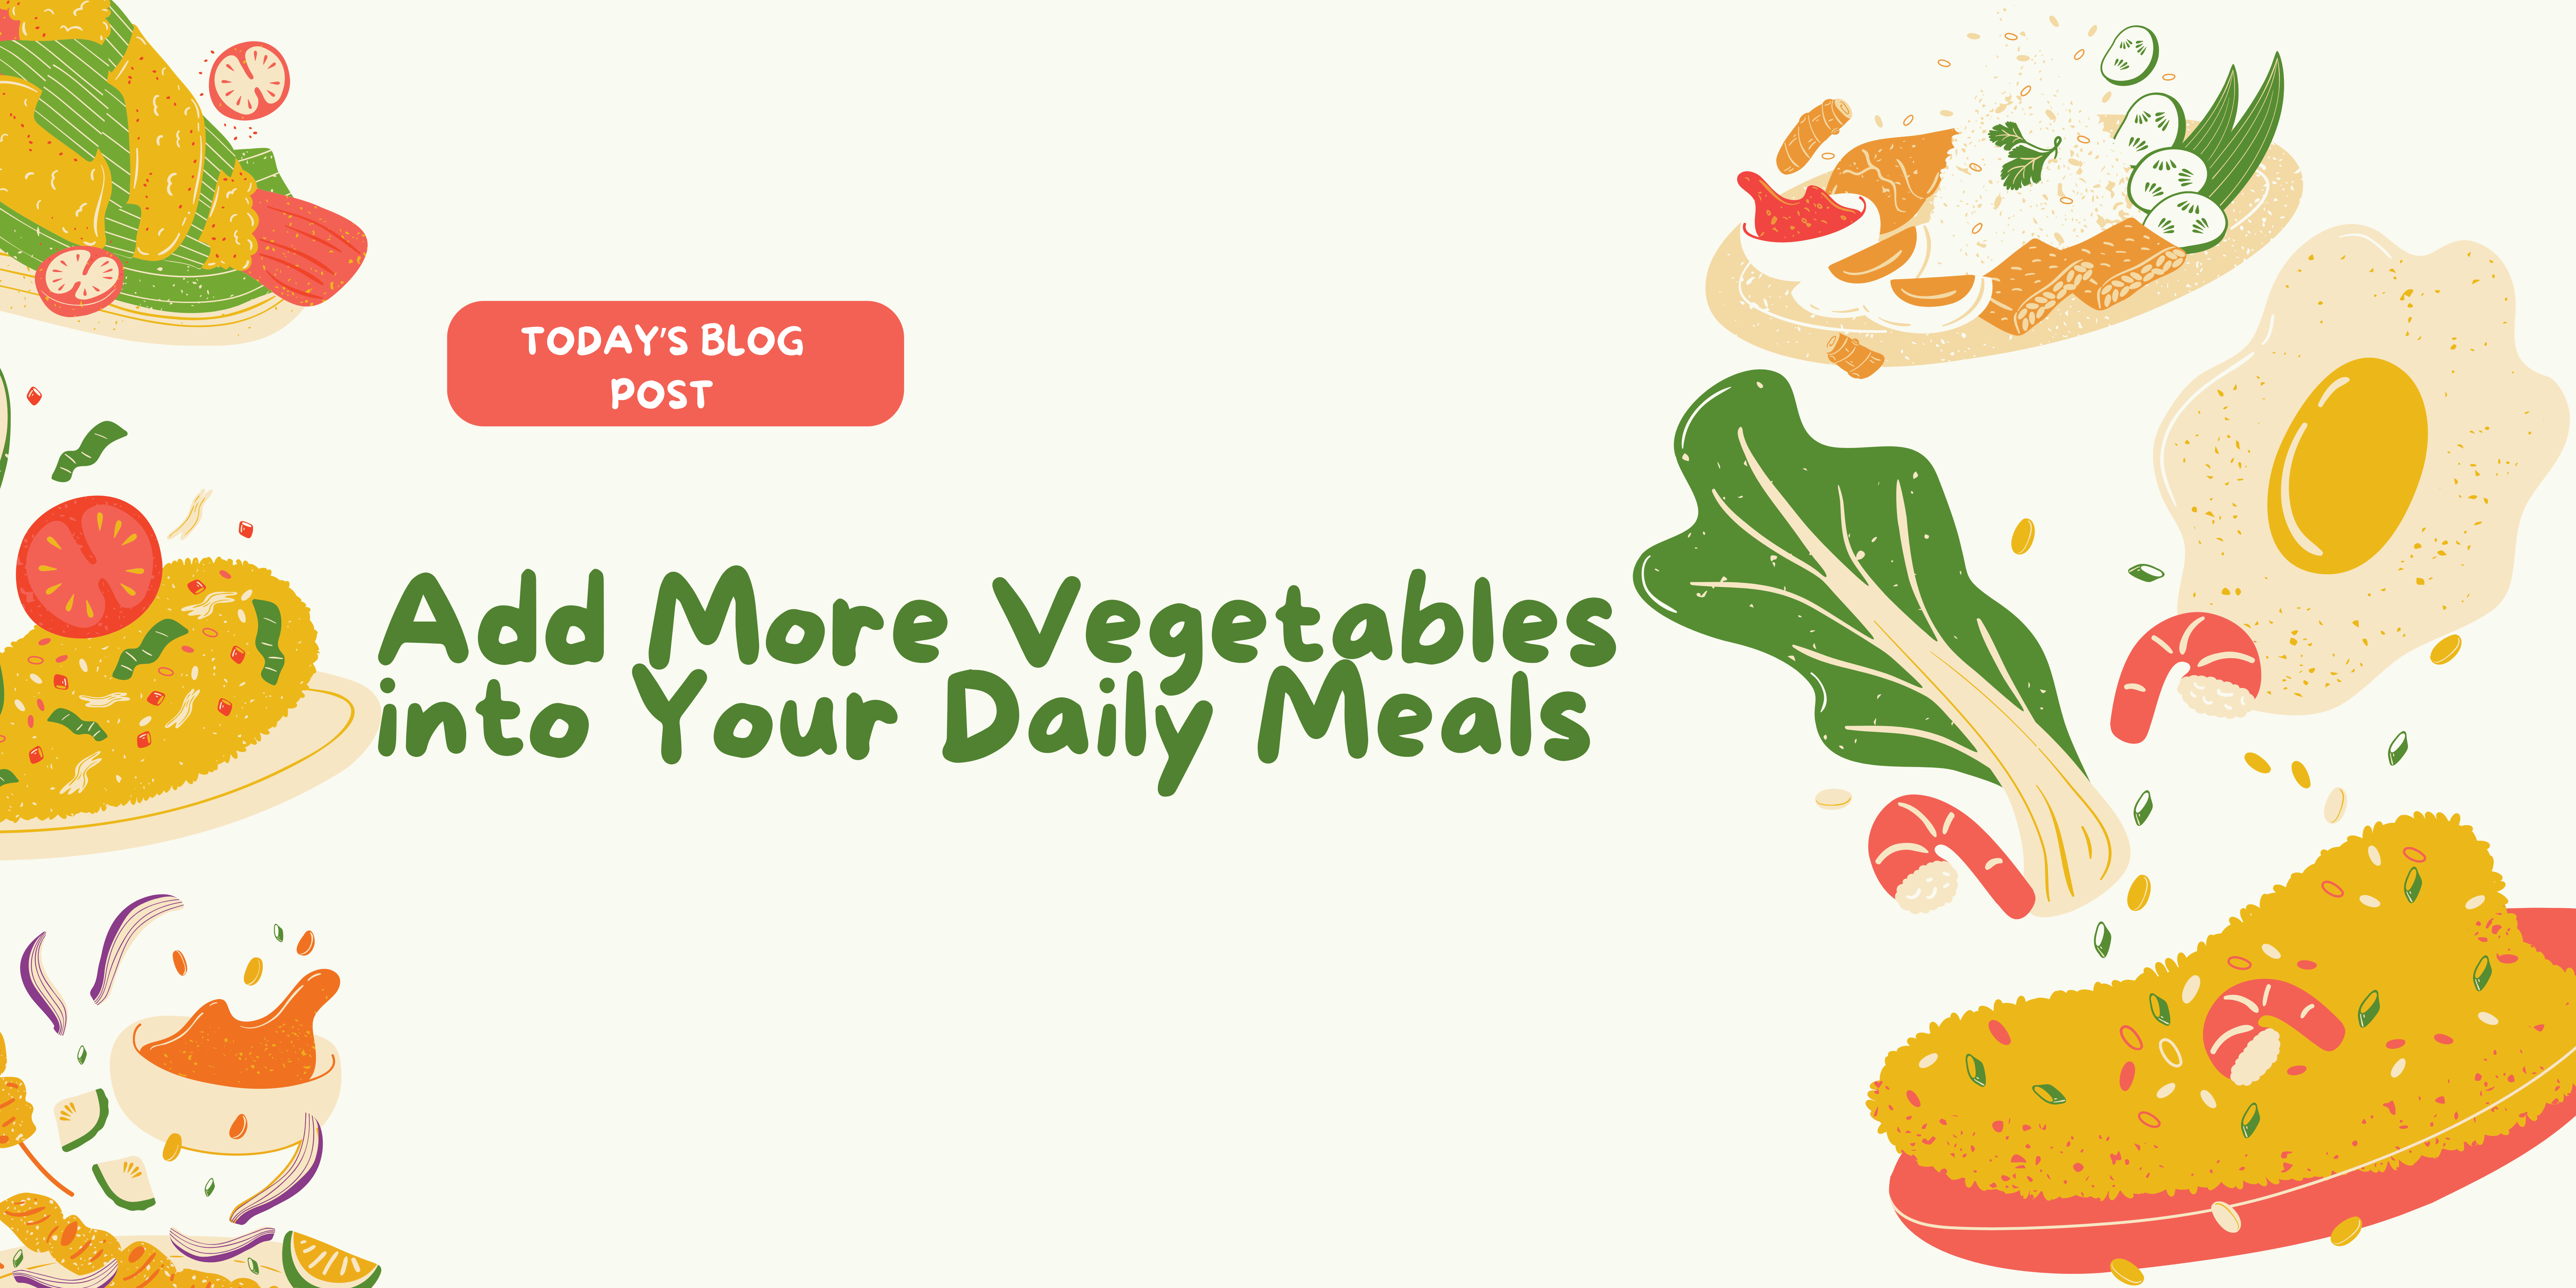 Vegetables - Recipes - Healthy Eating - Diet Plan - Balanced Diet - Nutrient Dense - Eating More Vegetables